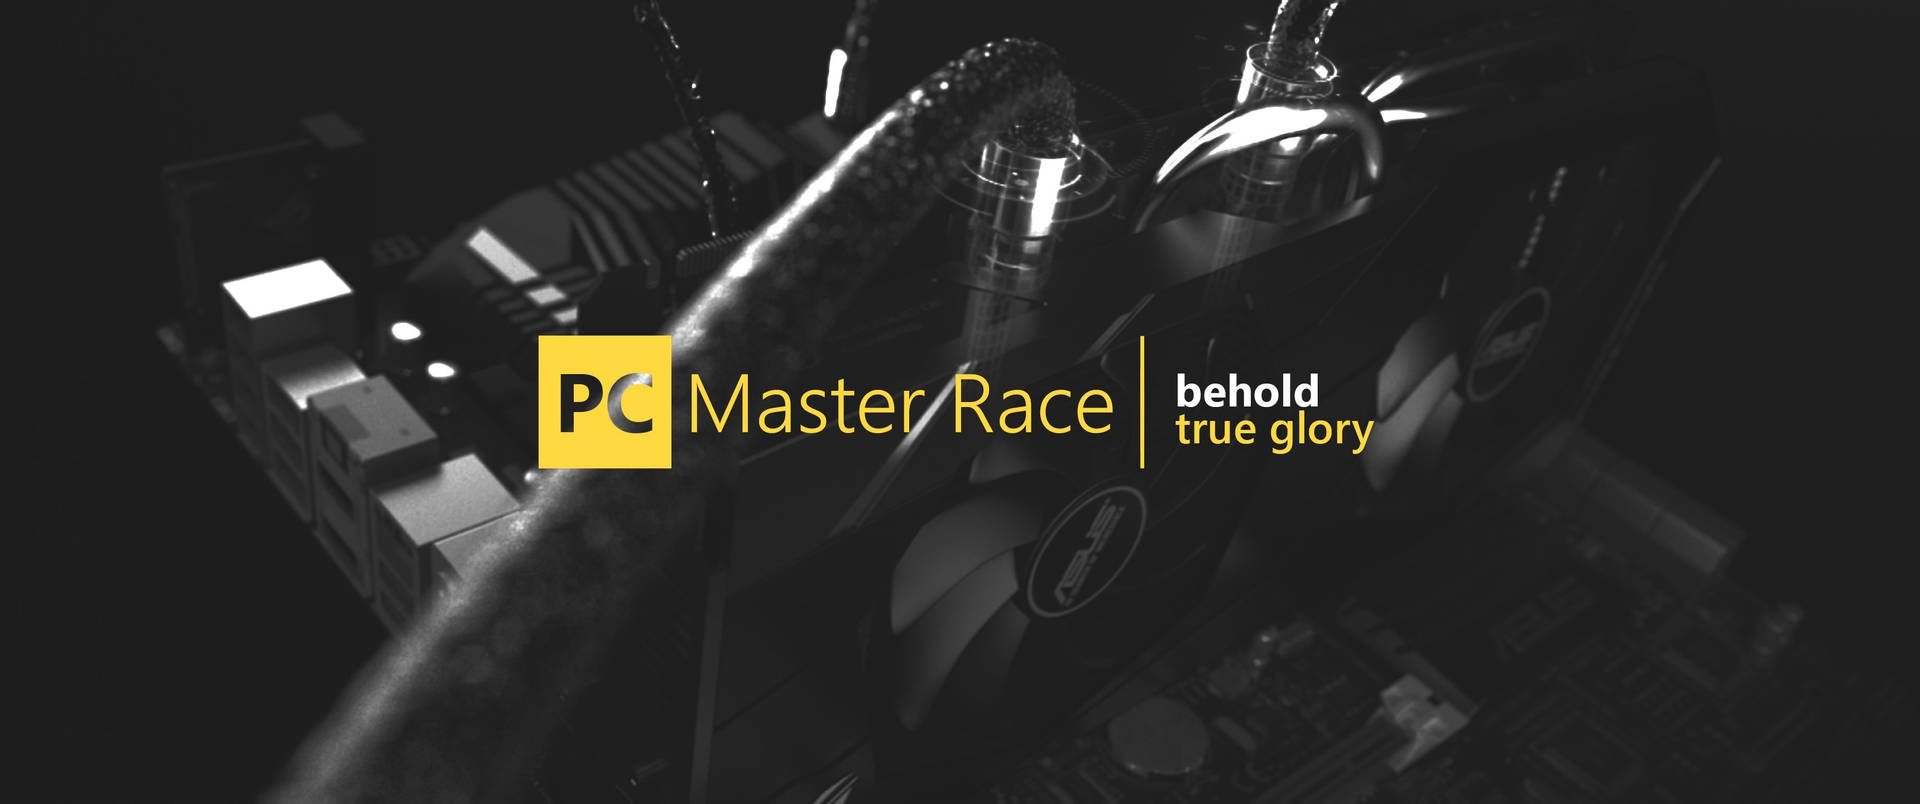 Pc Master Race Computer Processor Picture